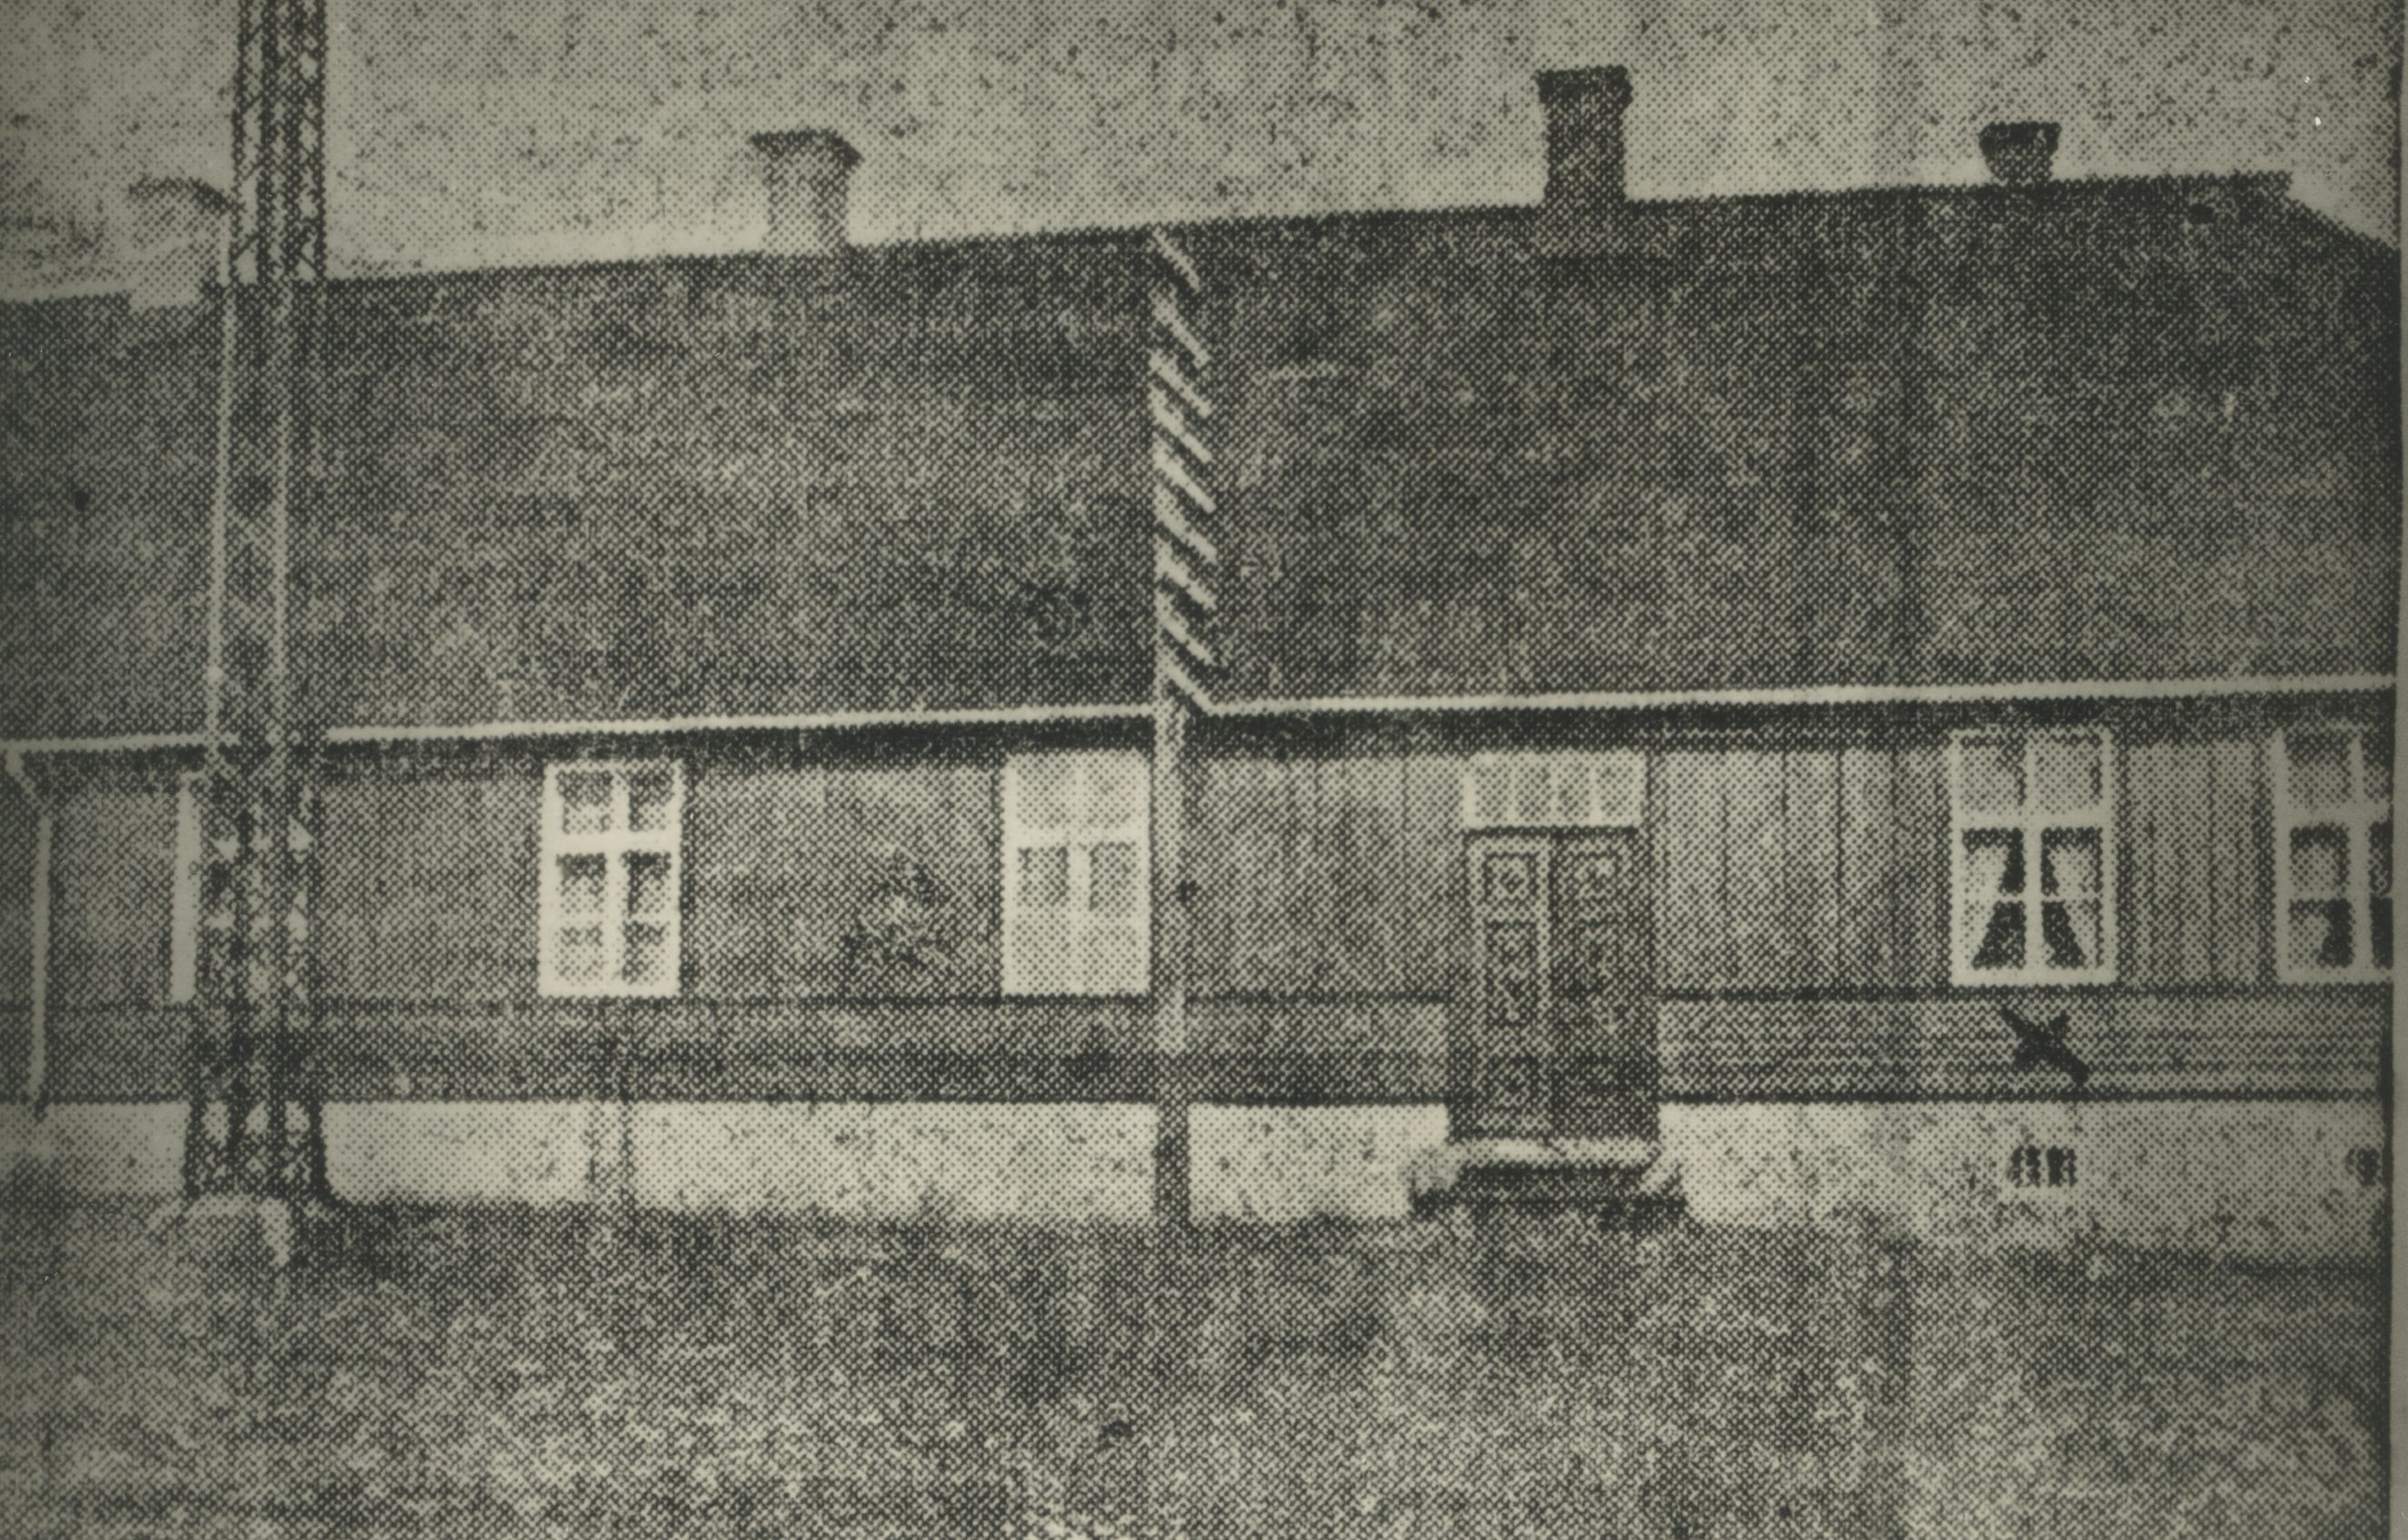 A. Kitzberg's residence in Viljandi, where he wrote "Punga Märdi"